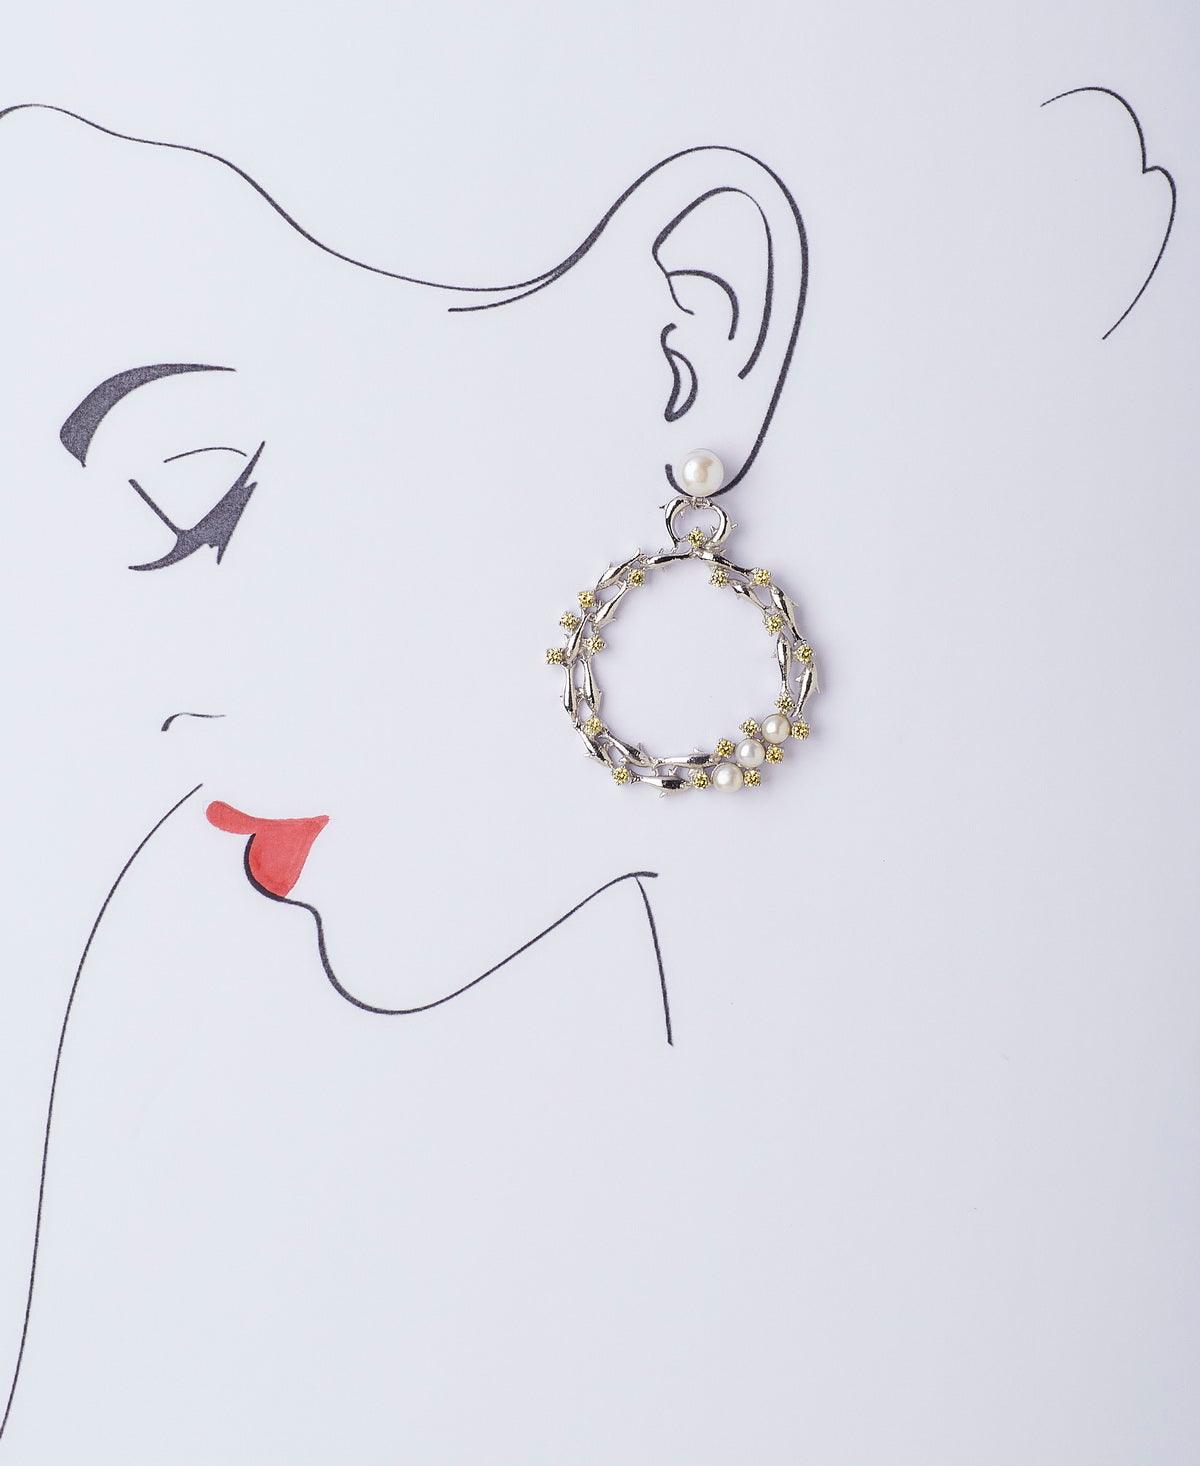 Impressive Rhodium Pearl Studded Hanging Earring - Chandrani Pearls